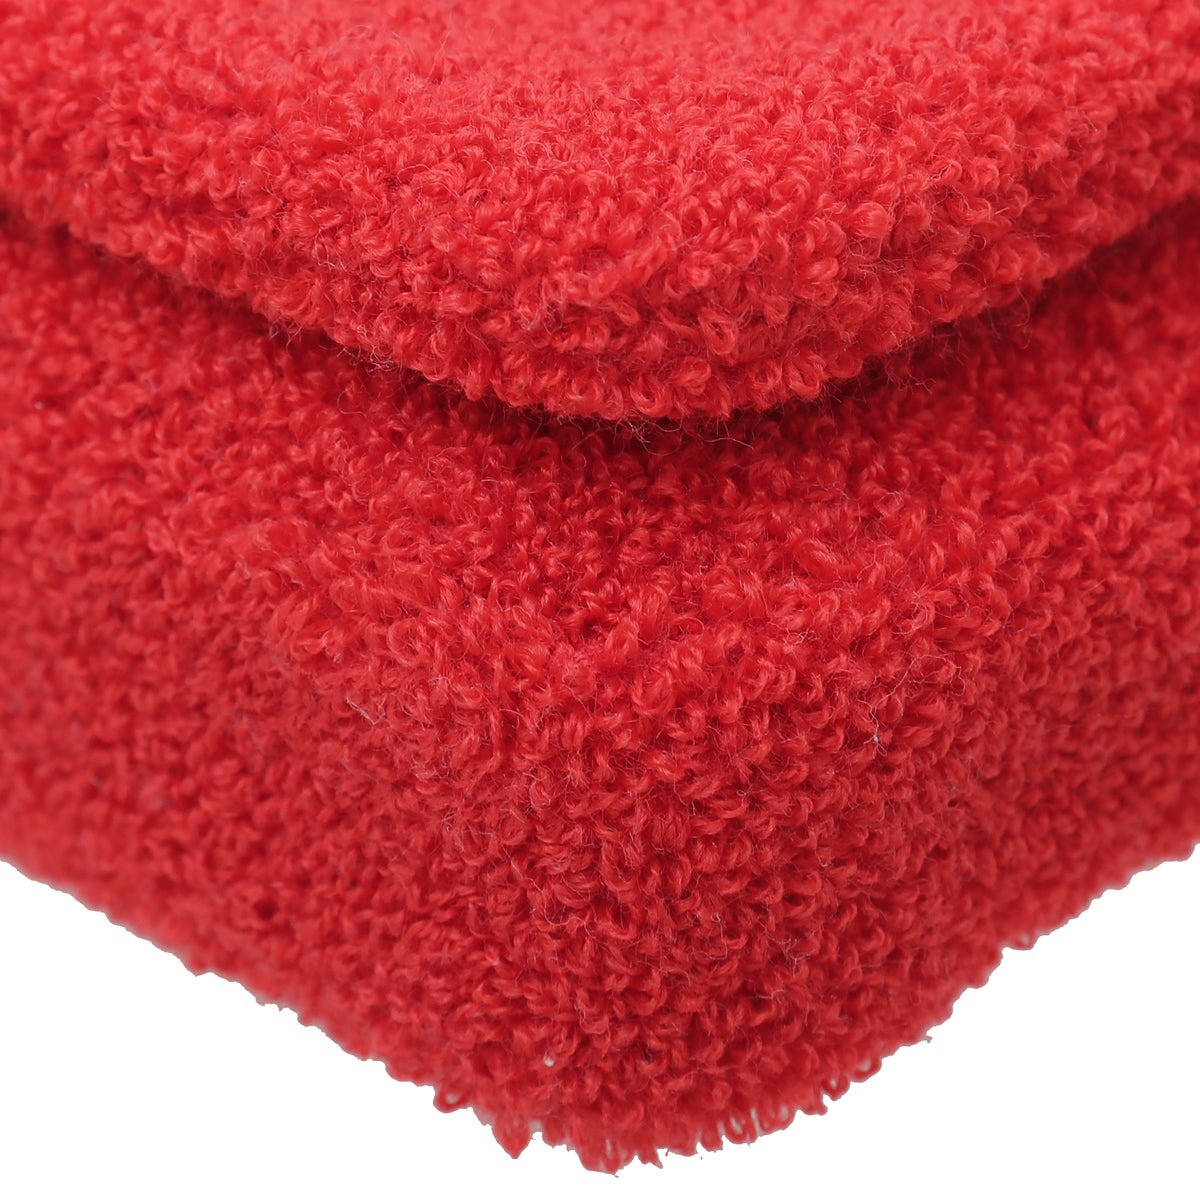 Burberry - Burberry Red Terry Cloth Mini Love Lola Bag | The Closet